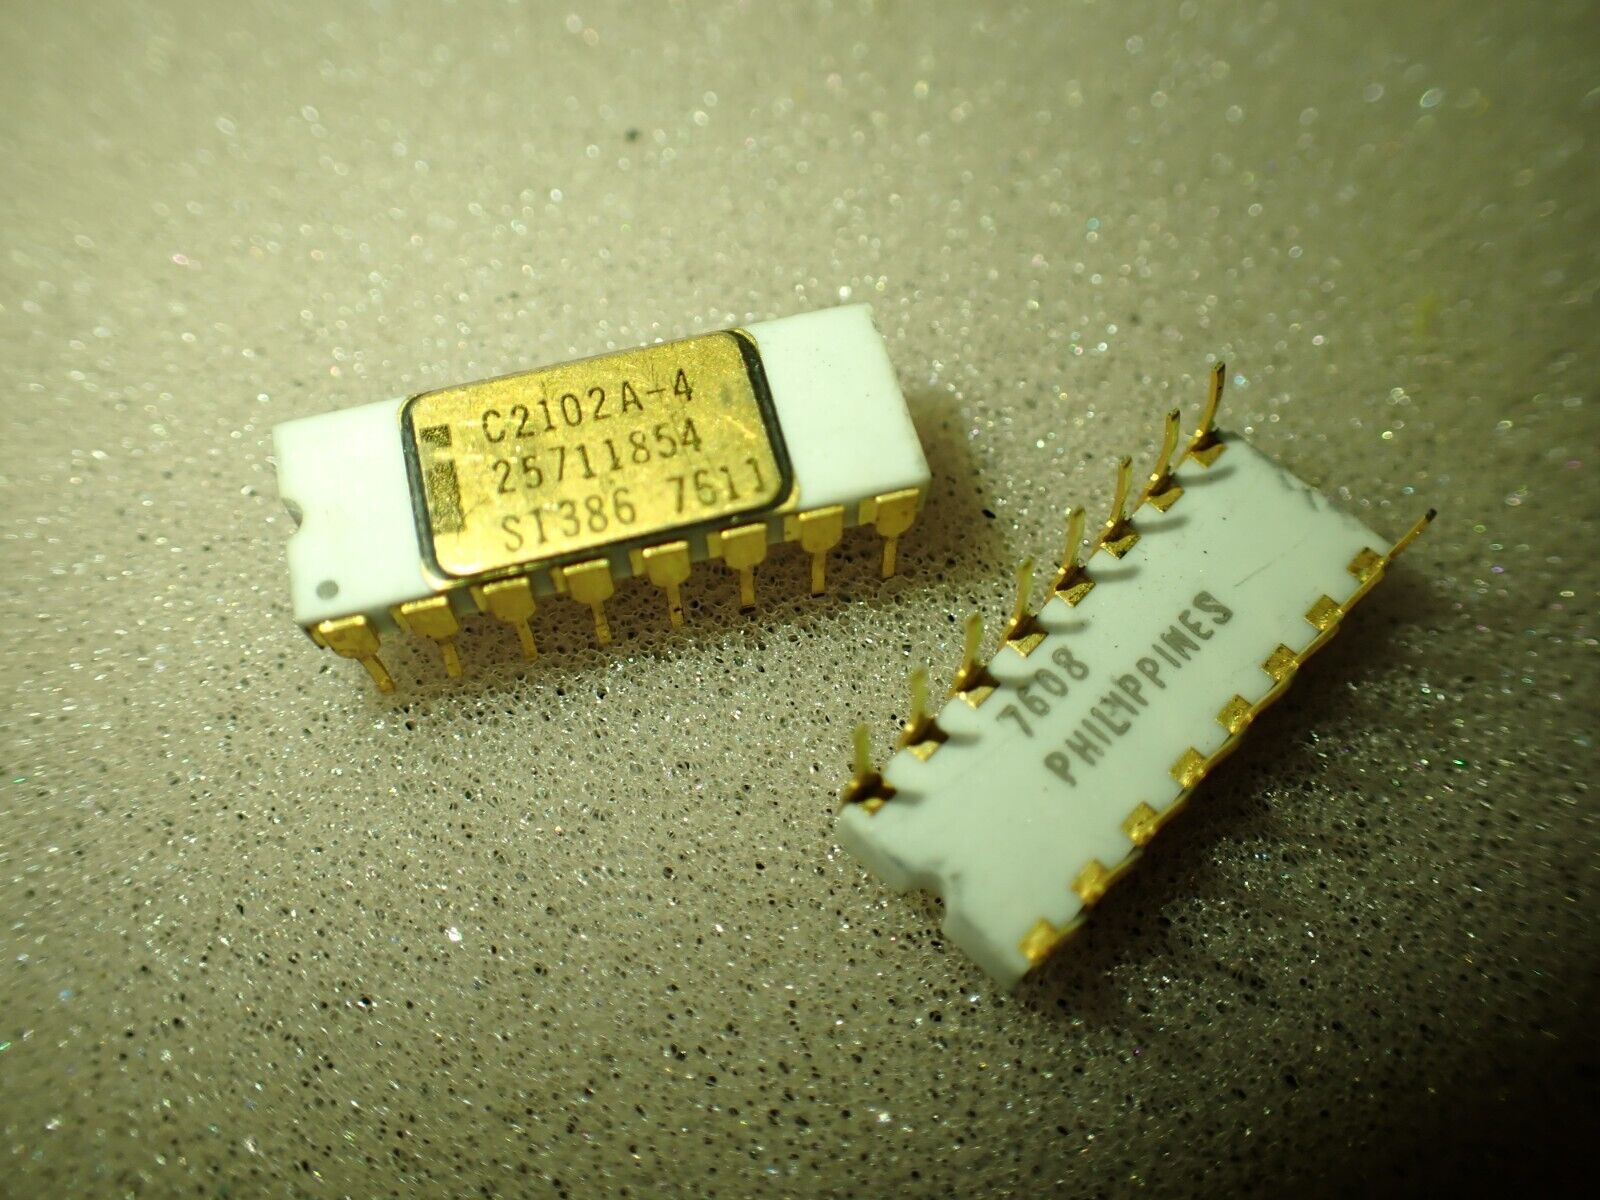 C2102A-4 INTEL VINTAGE 1K SRAM 1024Bit CERAMIC GOLD PINS APPLE 1, DC1976 Mimeo-1